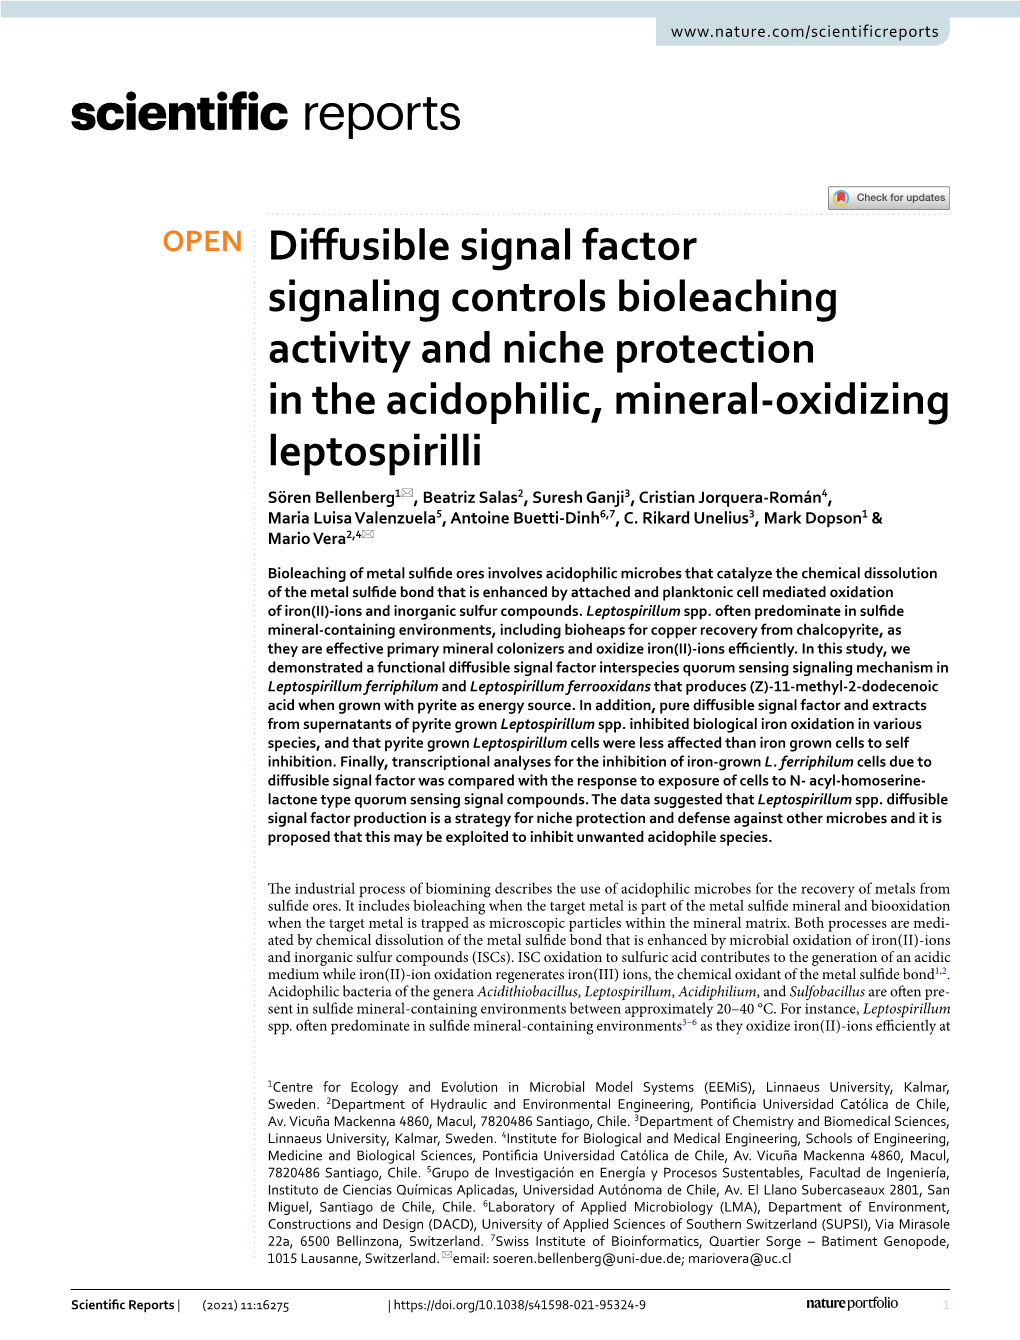 Diffusible Signal Factor Signaling Controls Bioleaching Activity And